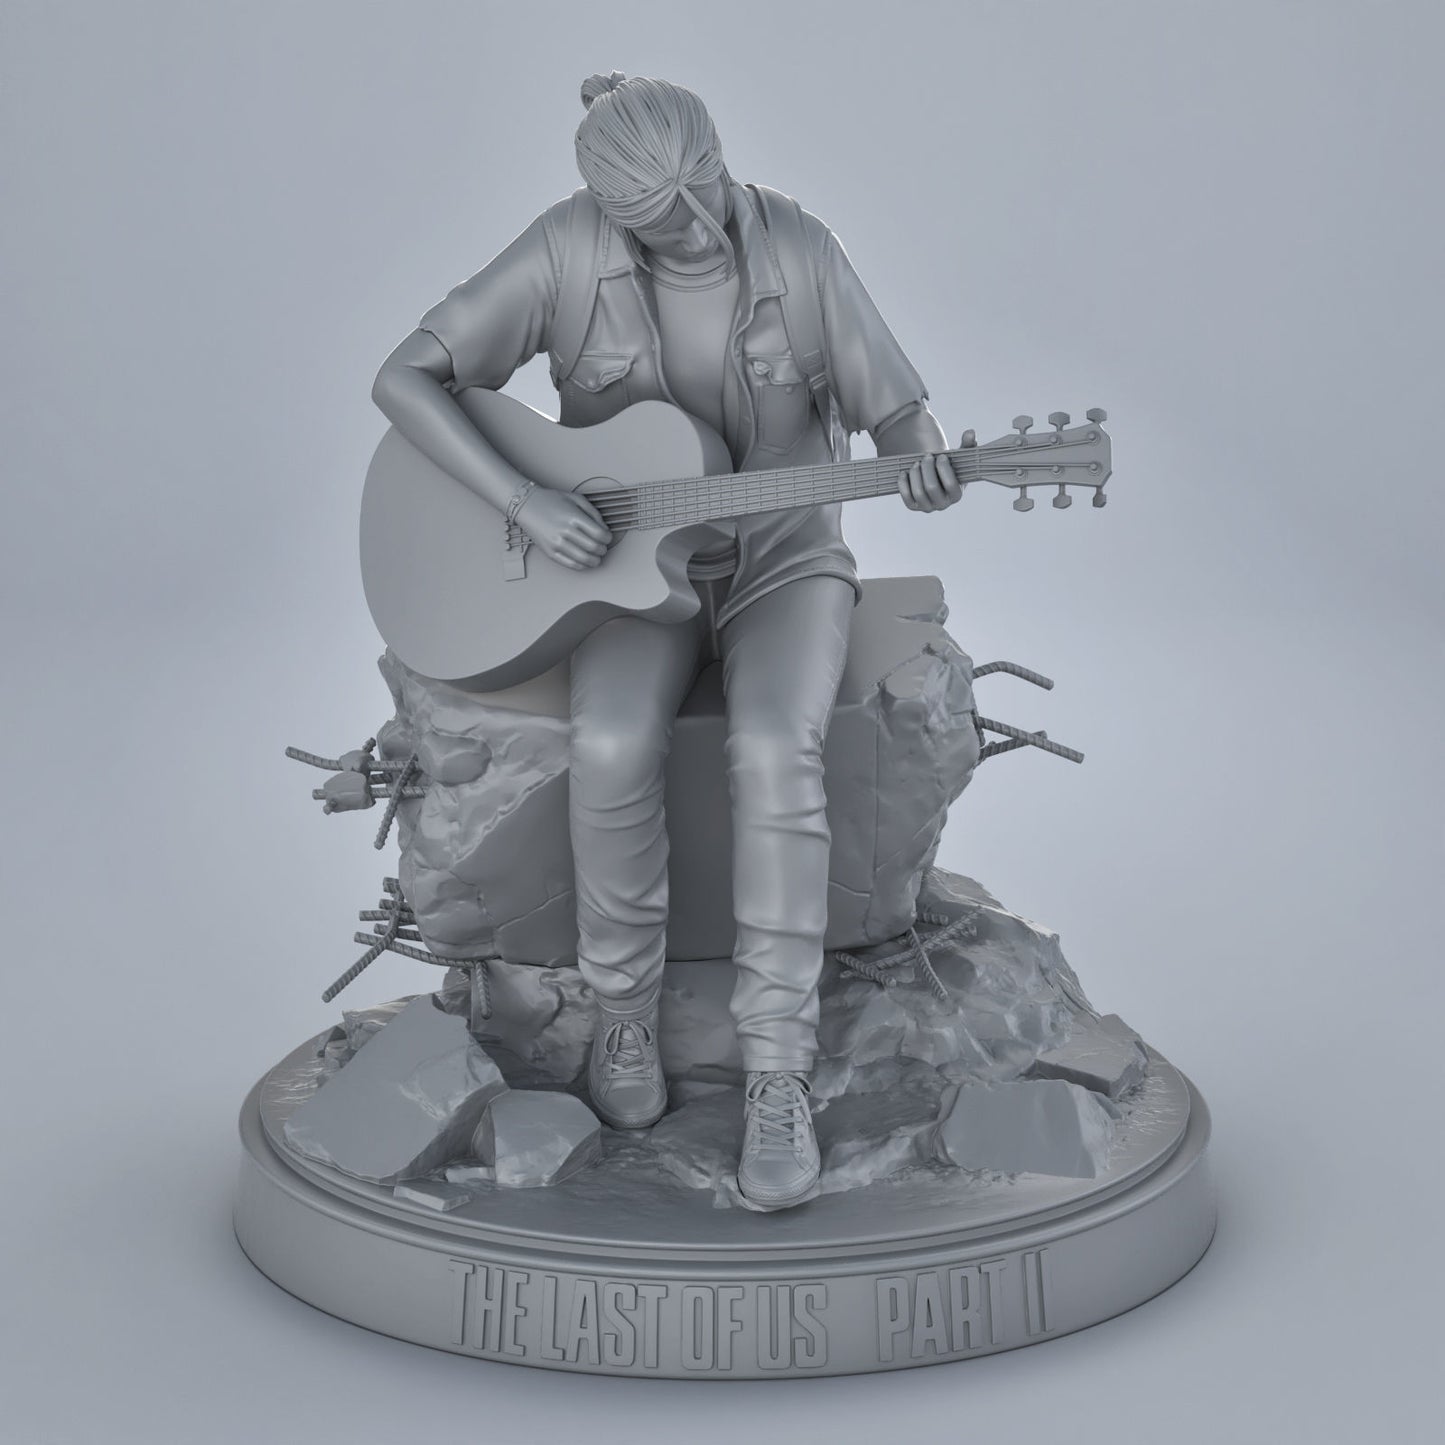 Ellie - The Last of Us Part 2 3D Print Model by qaz